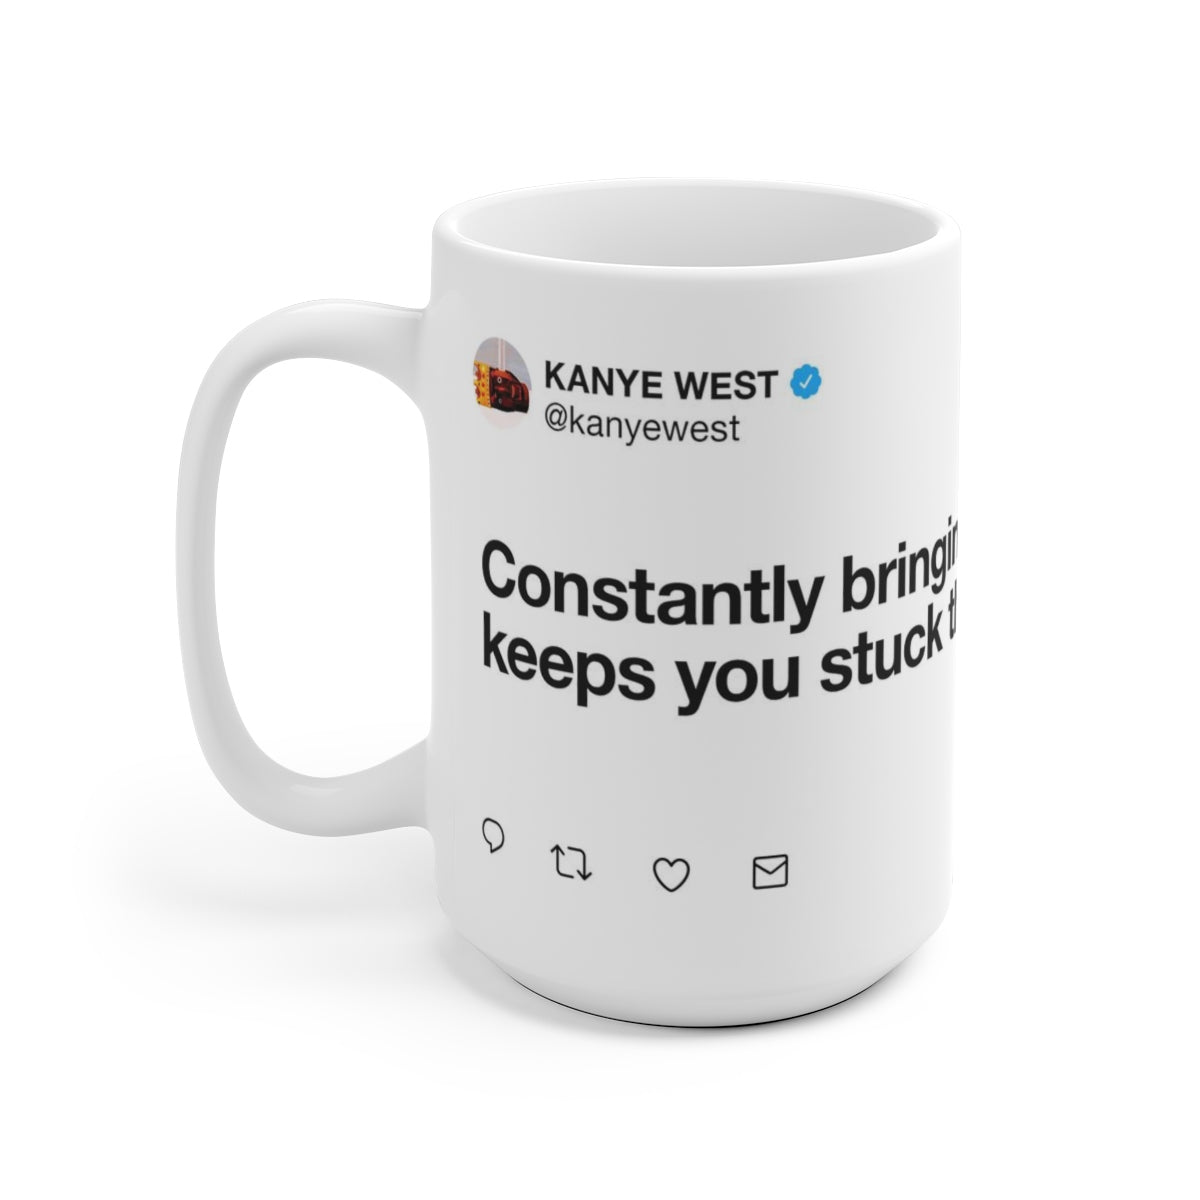 Constantly bringing up the past keeps you stuck there - Kanye West Tweet Mug-Archethype